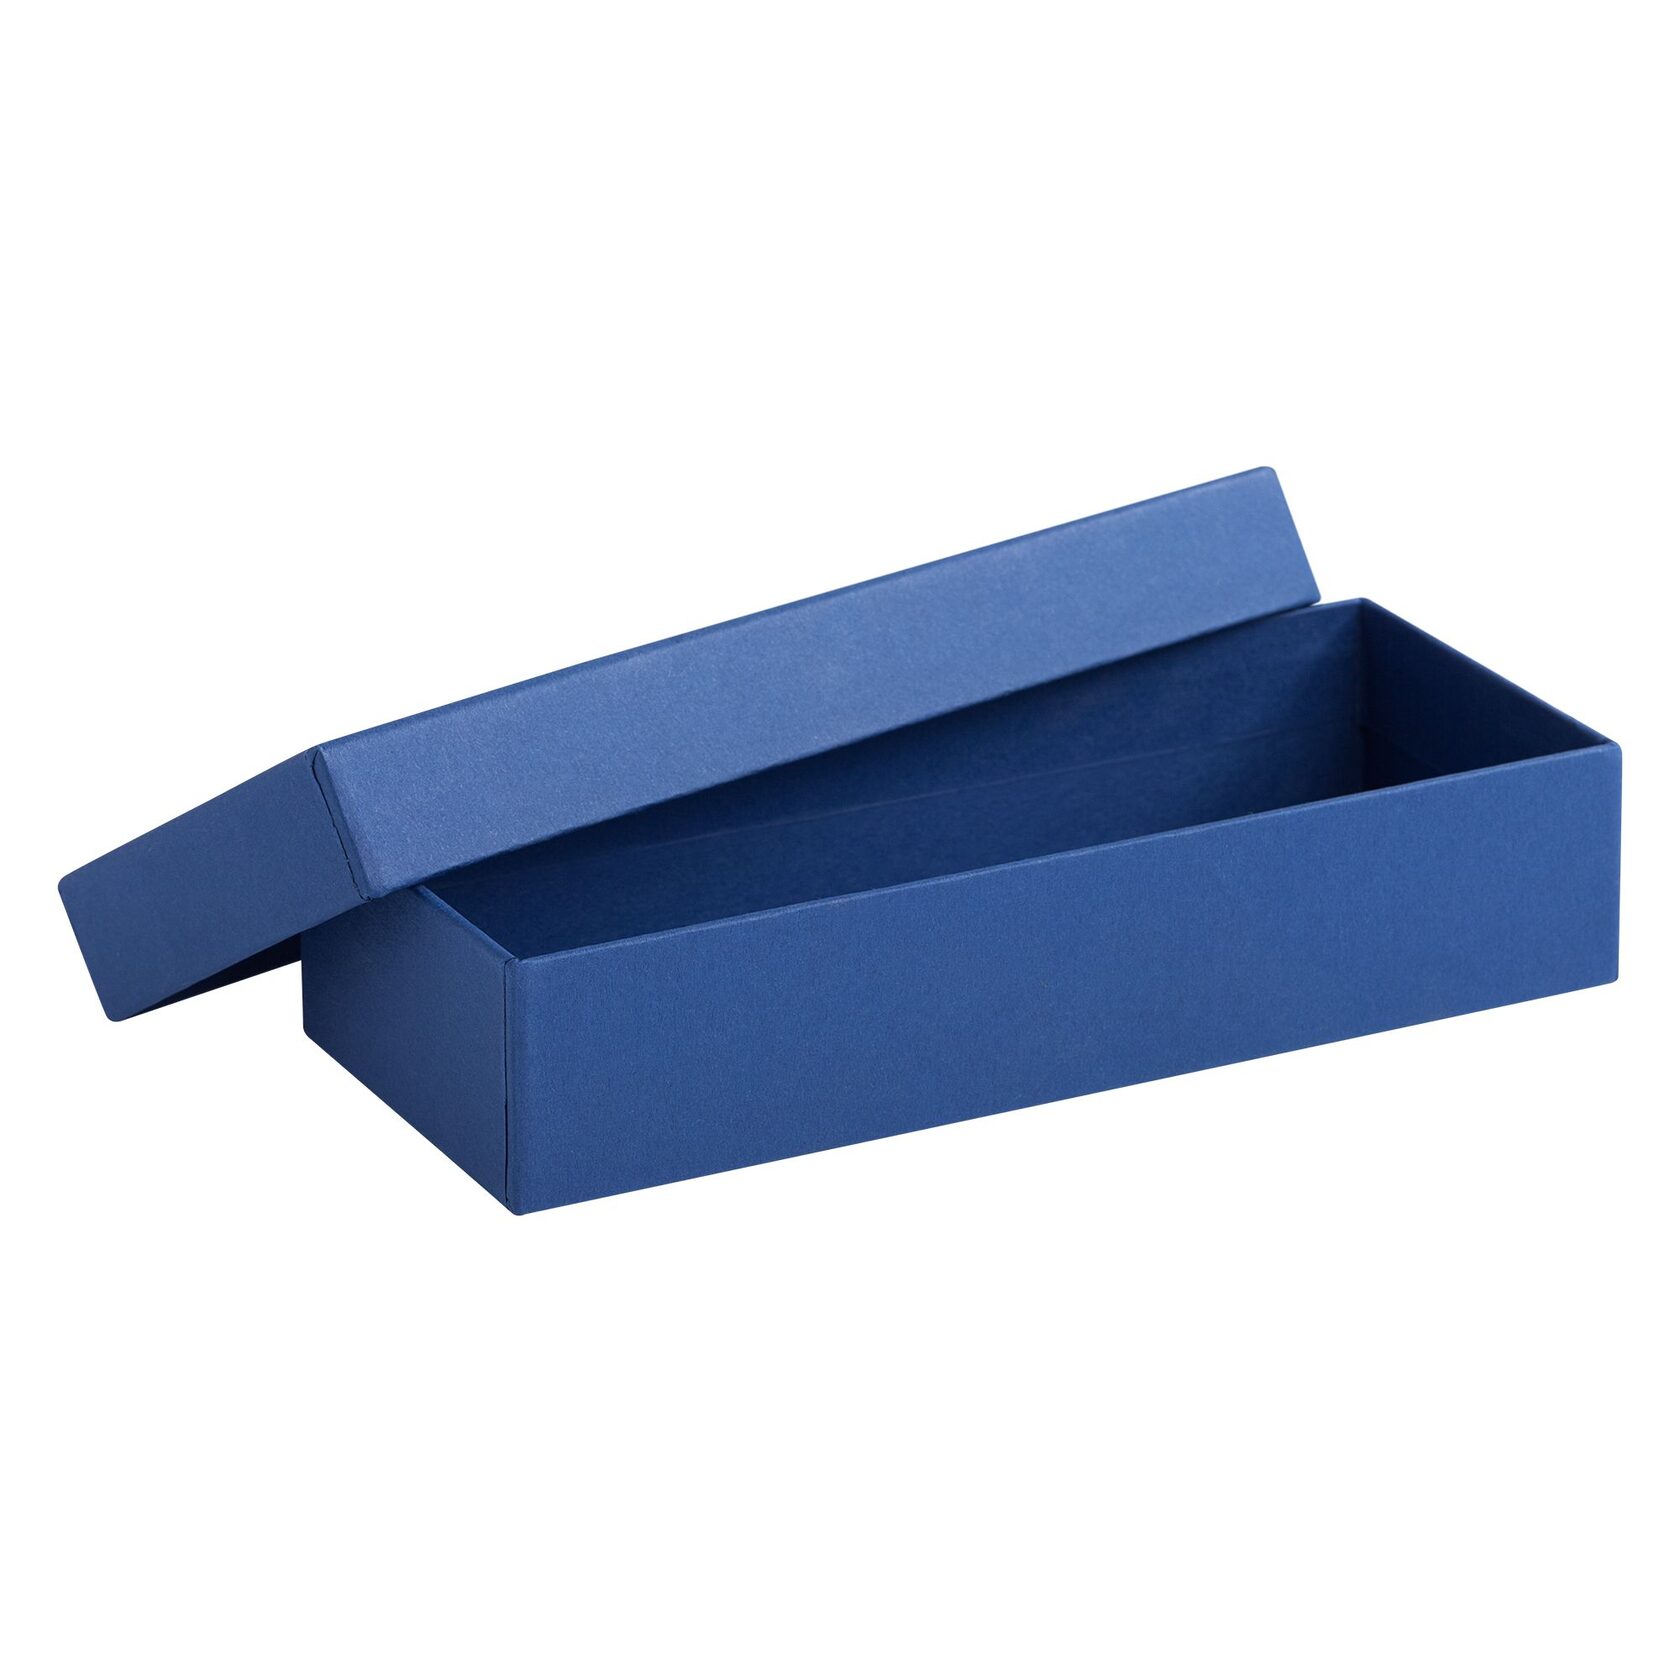 Коробки мини купить. Подарочная коробка. Подарочные коробки синие. Прямоугольная коробка для подарка. Синяя подарочная коробка.